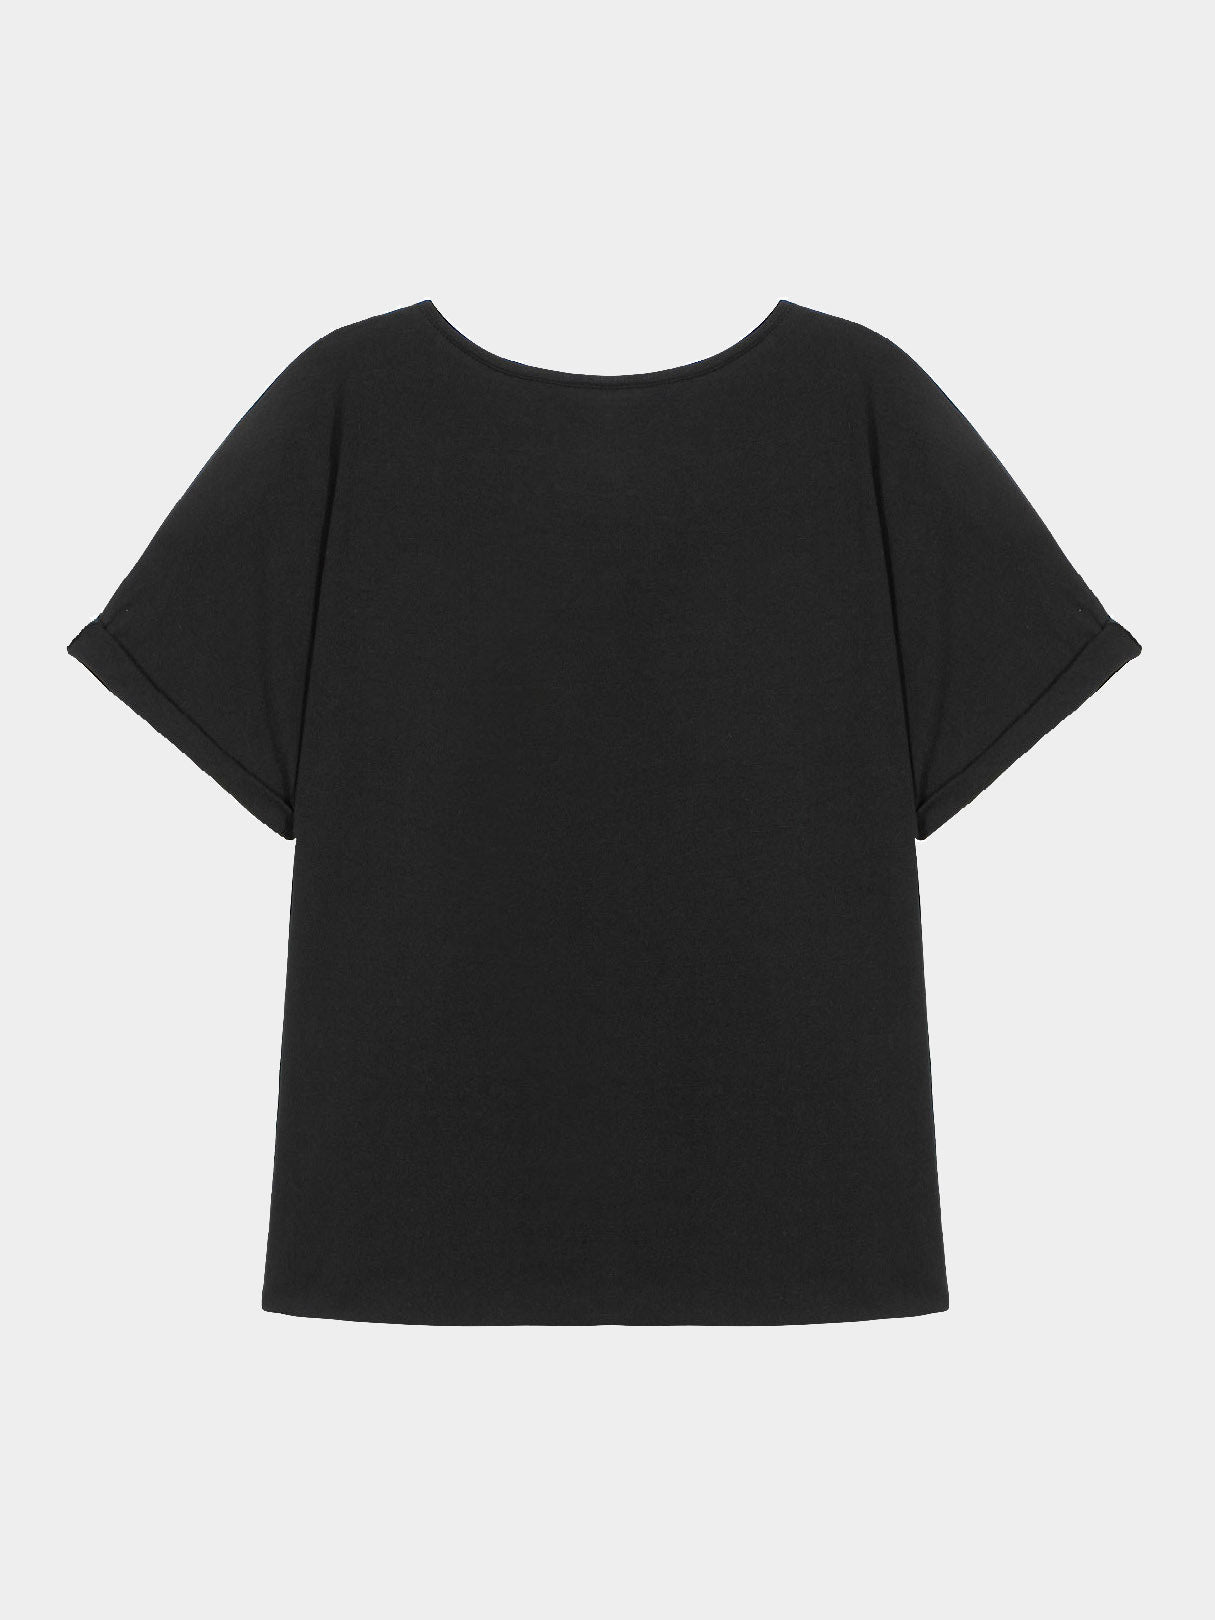 NEW FEELING Womens Black T-Shirts